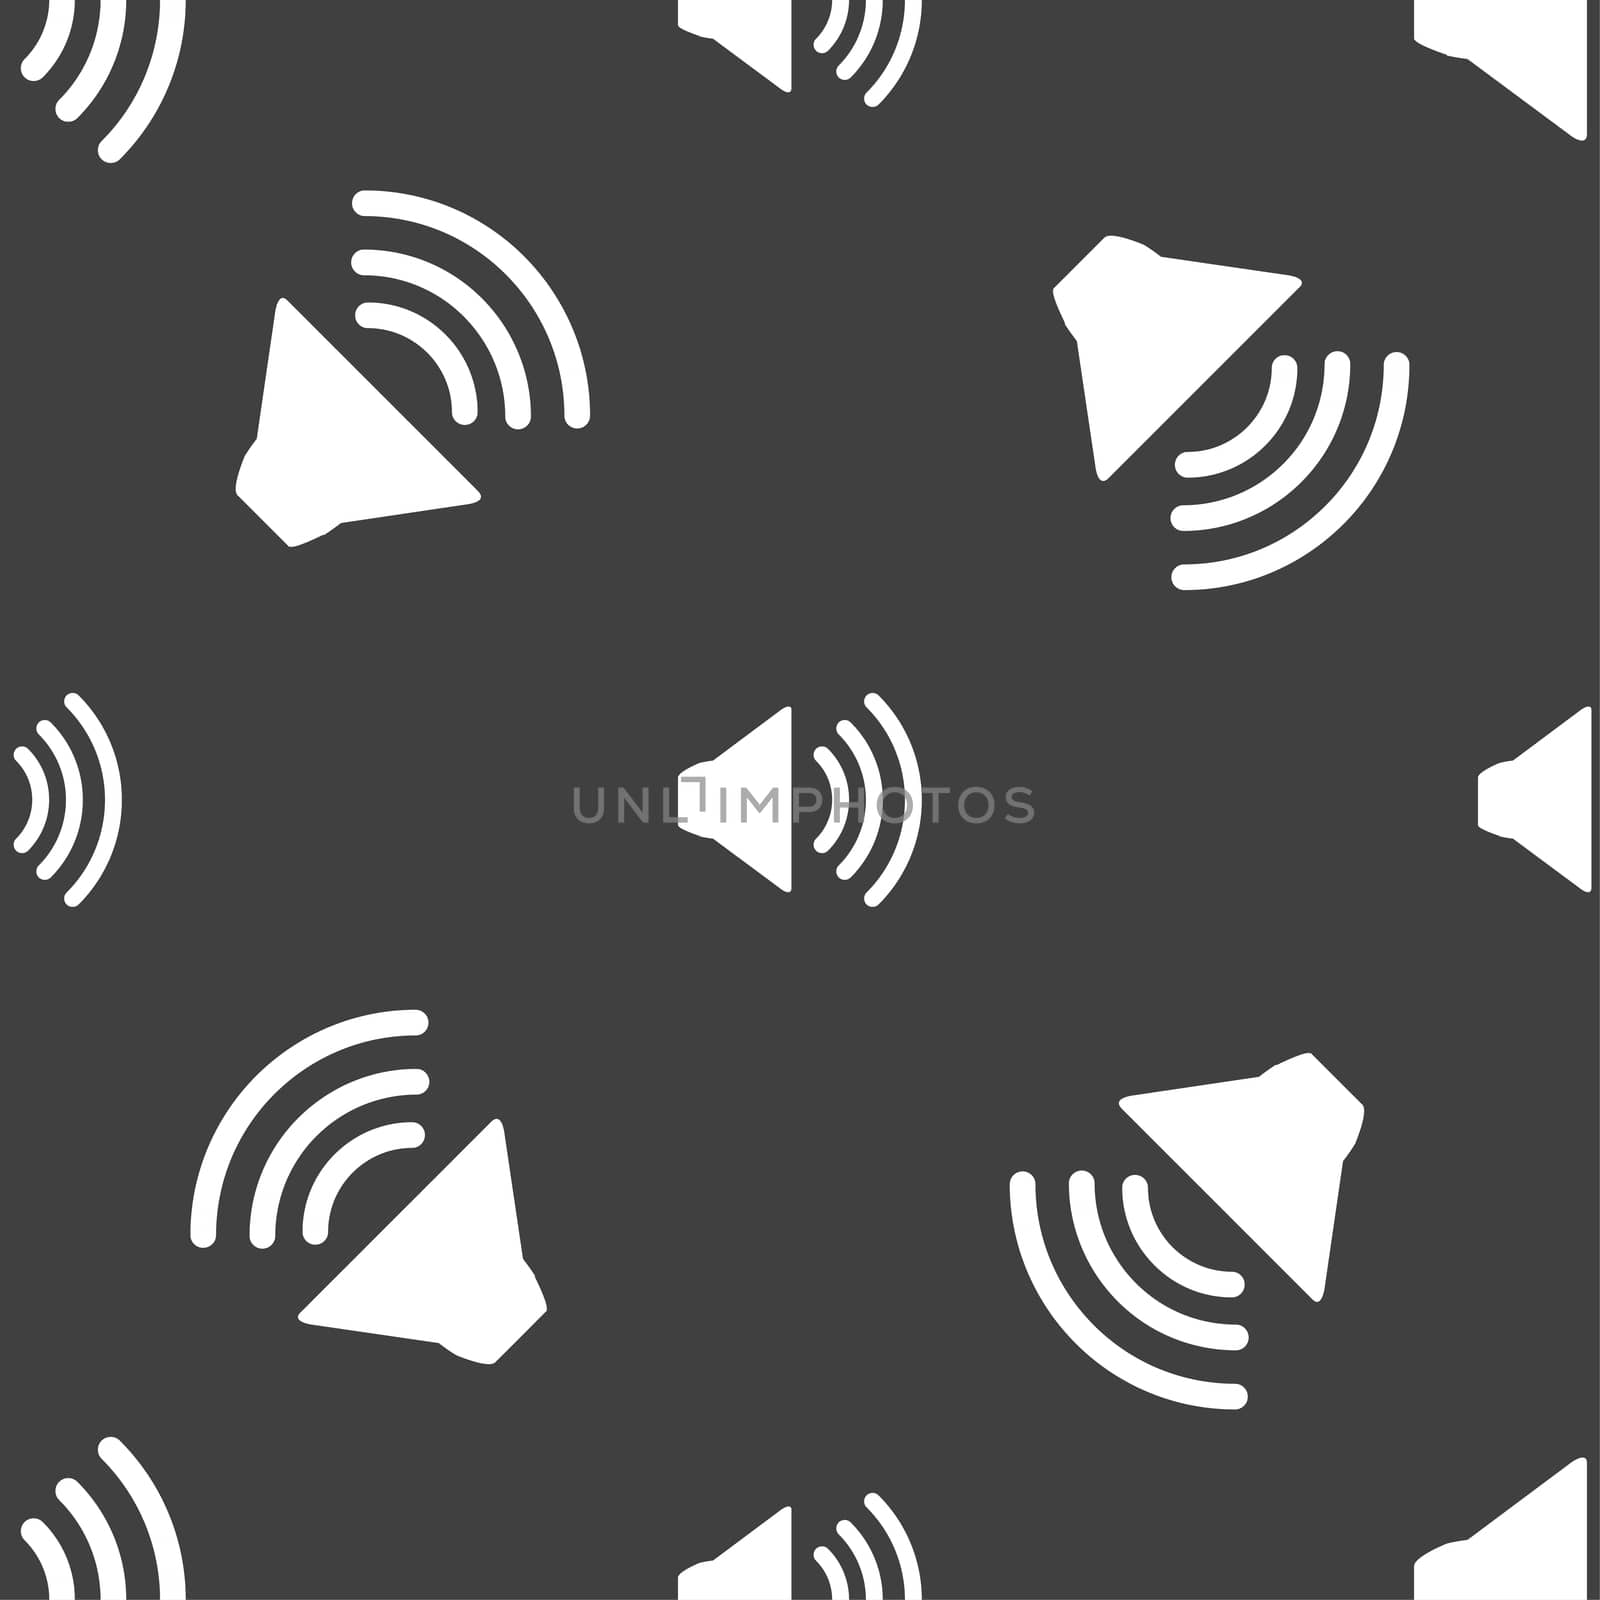 Speaker volume sign icon. Sound symbol. Seamless pattern on a gray background. illustration